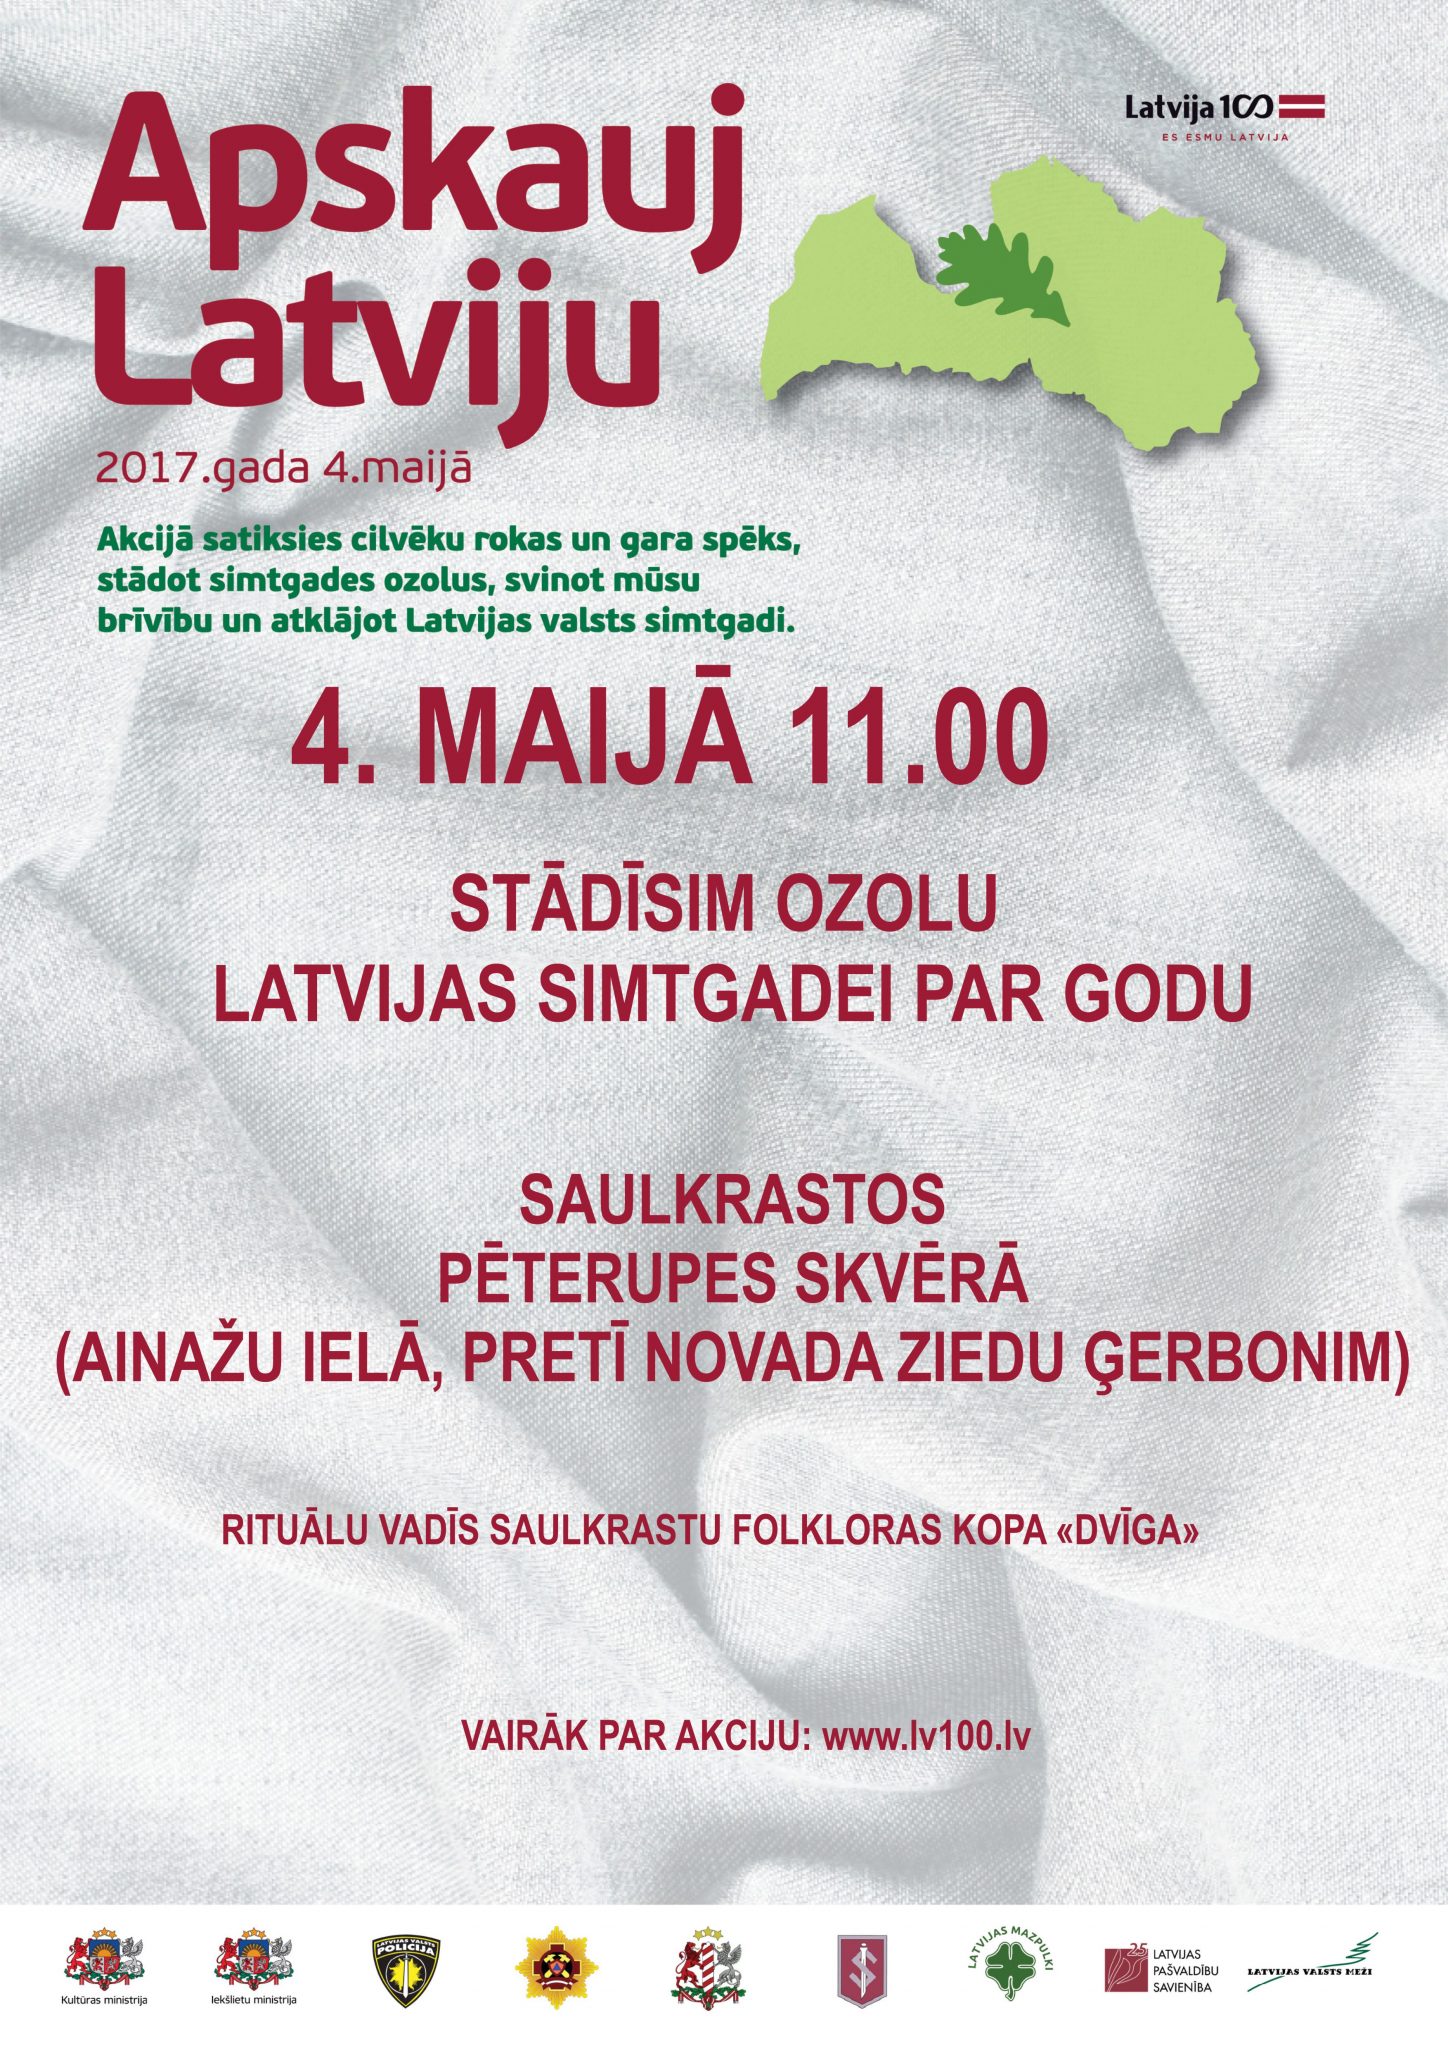 Akcija "Apskauj Latviju!" Saulkrastos